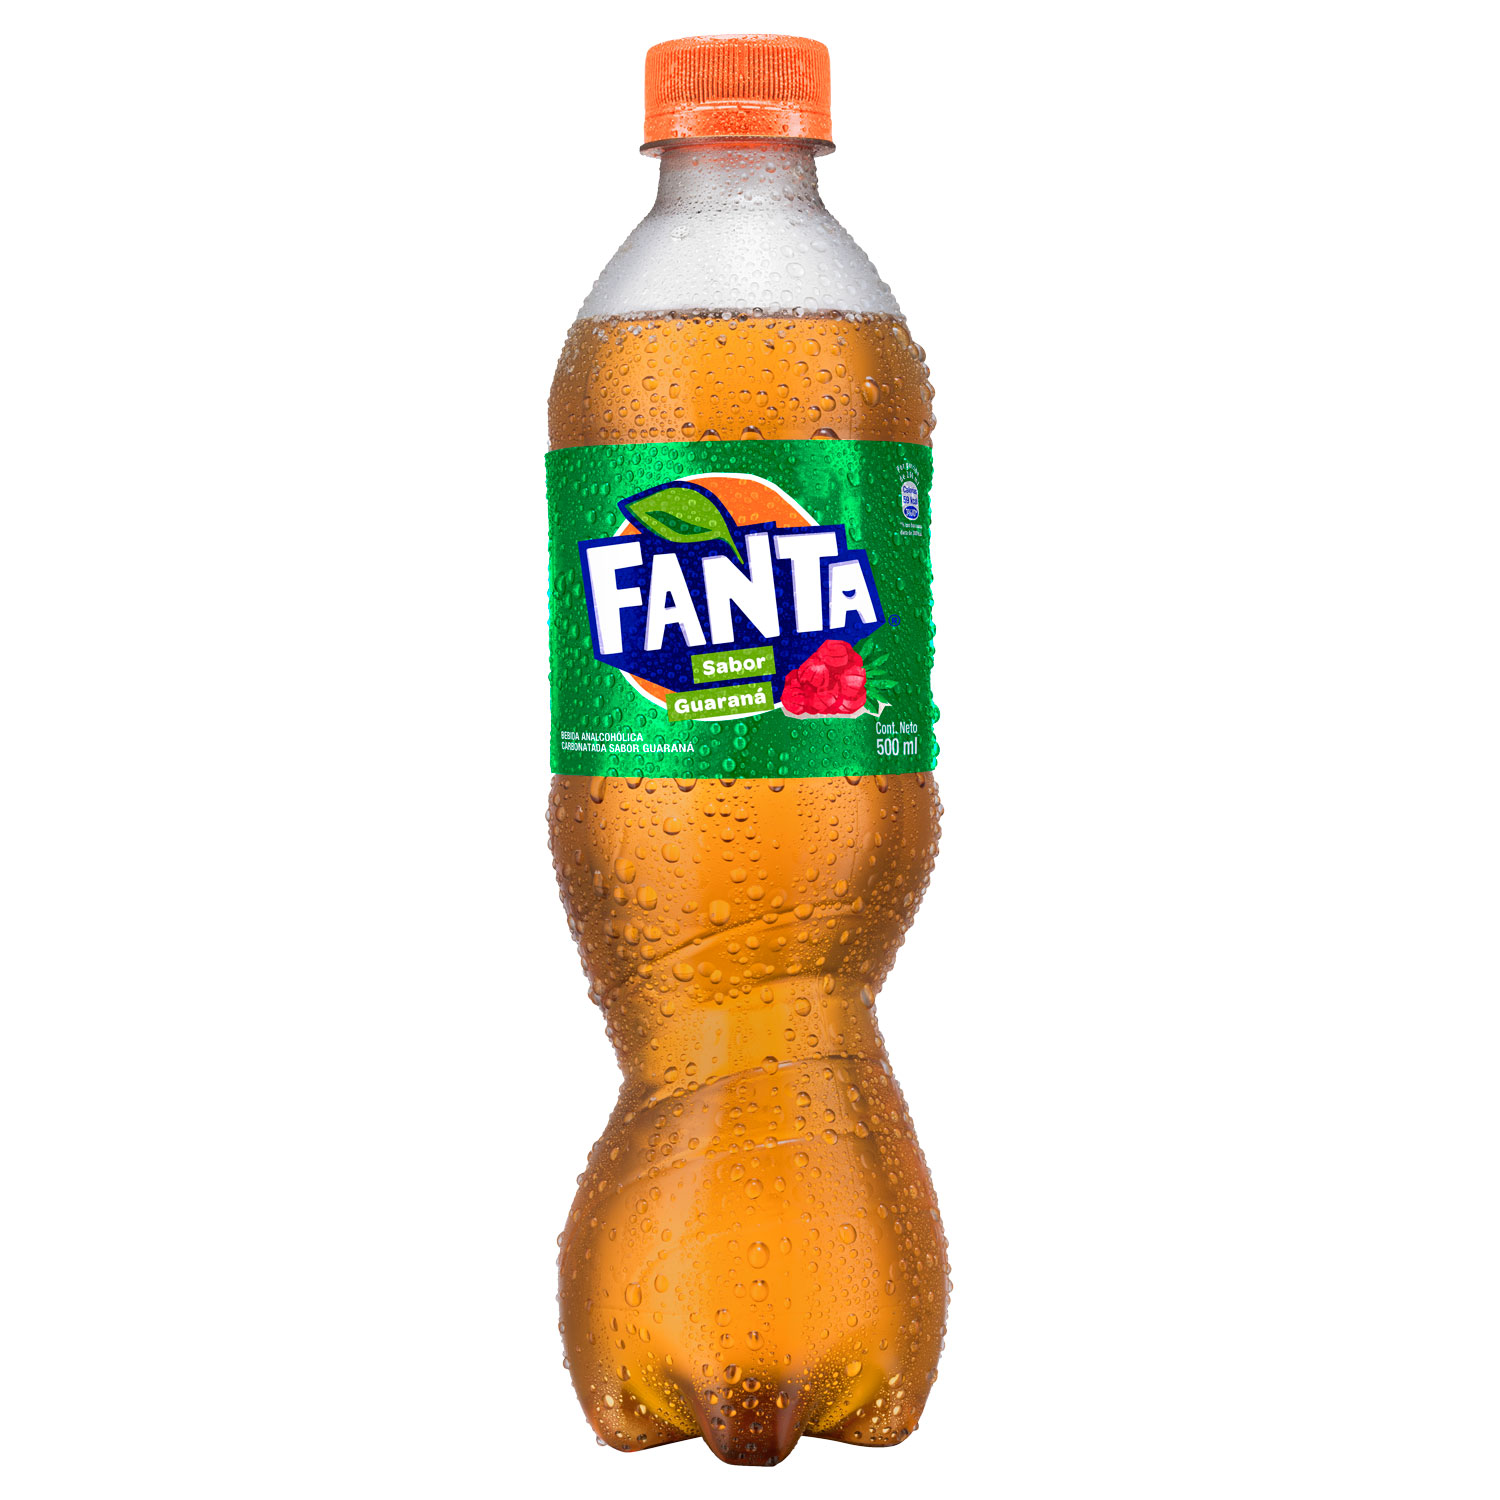 Botella de Fanta Guaraná